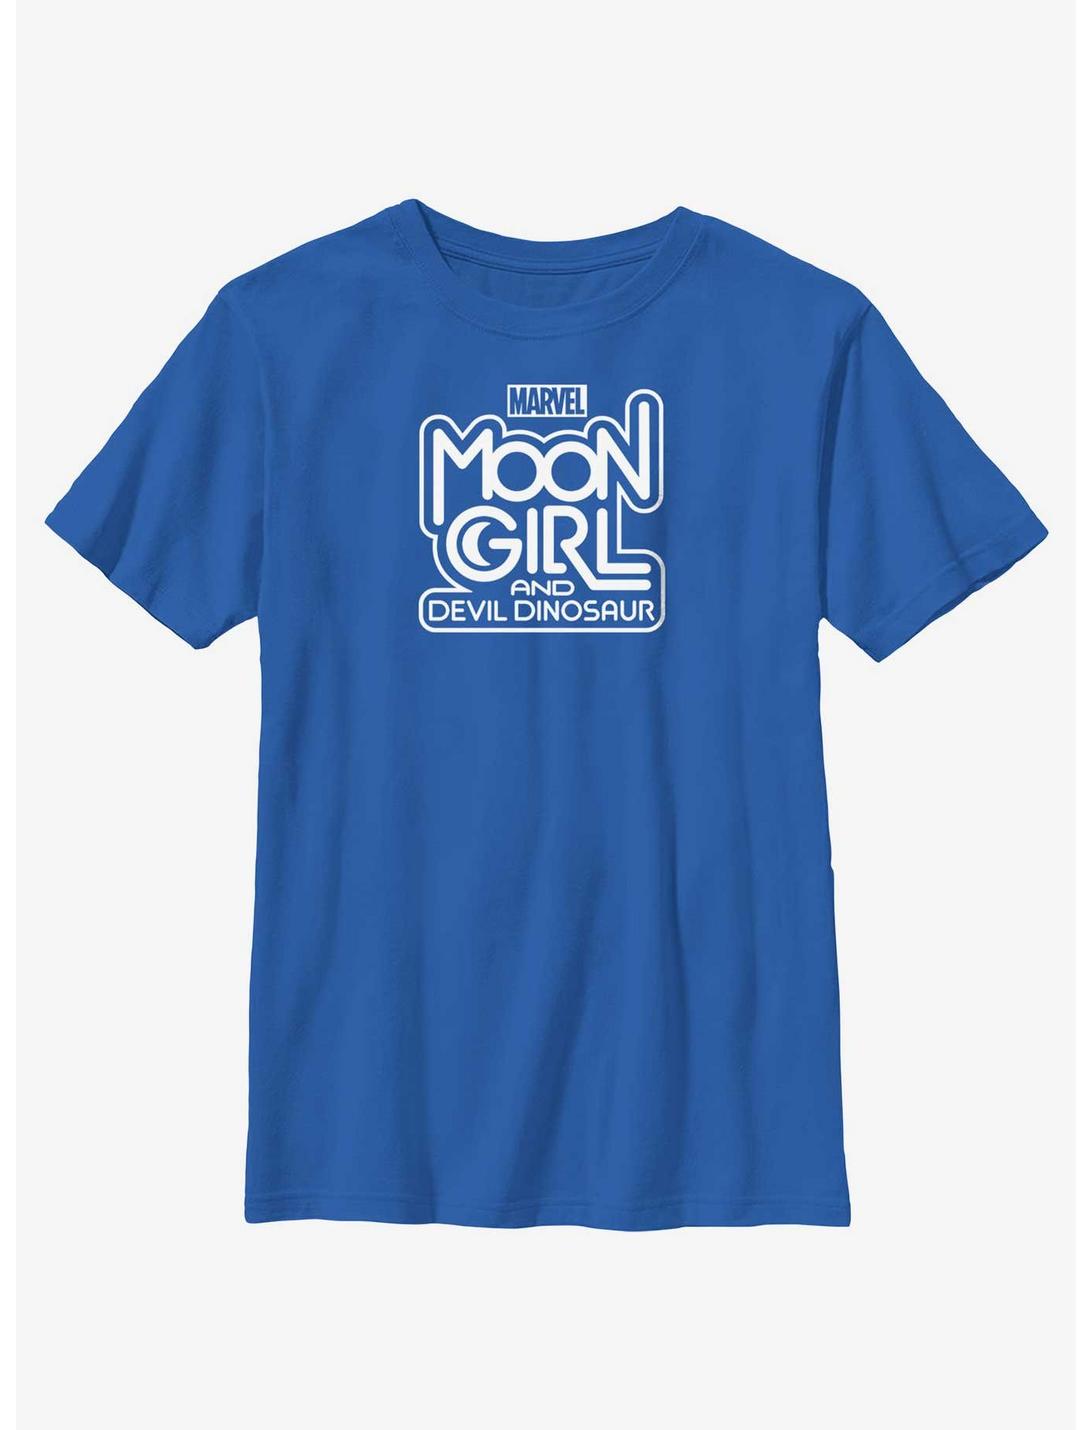 Marvel Moon Girl And Devil Dinosaur Moon Girl Title Youth T-Shirt, ROYAL, hi-res